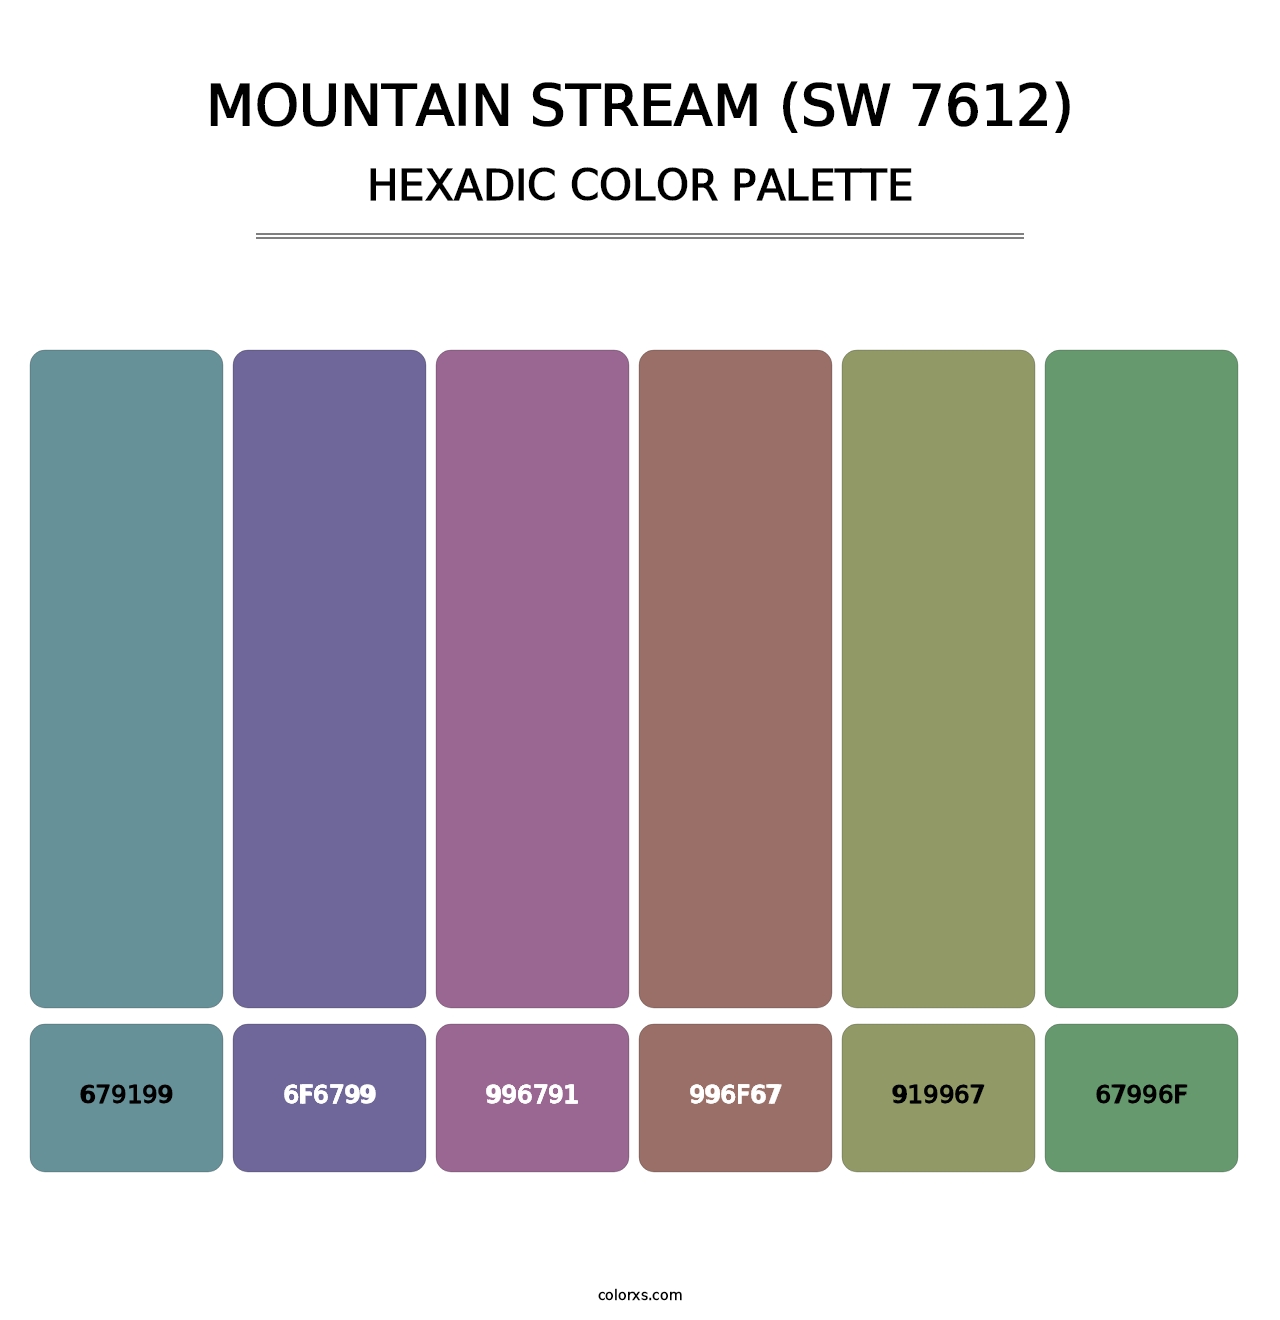 Mountain Stream (SW 7612) - Hexadic Color Palette